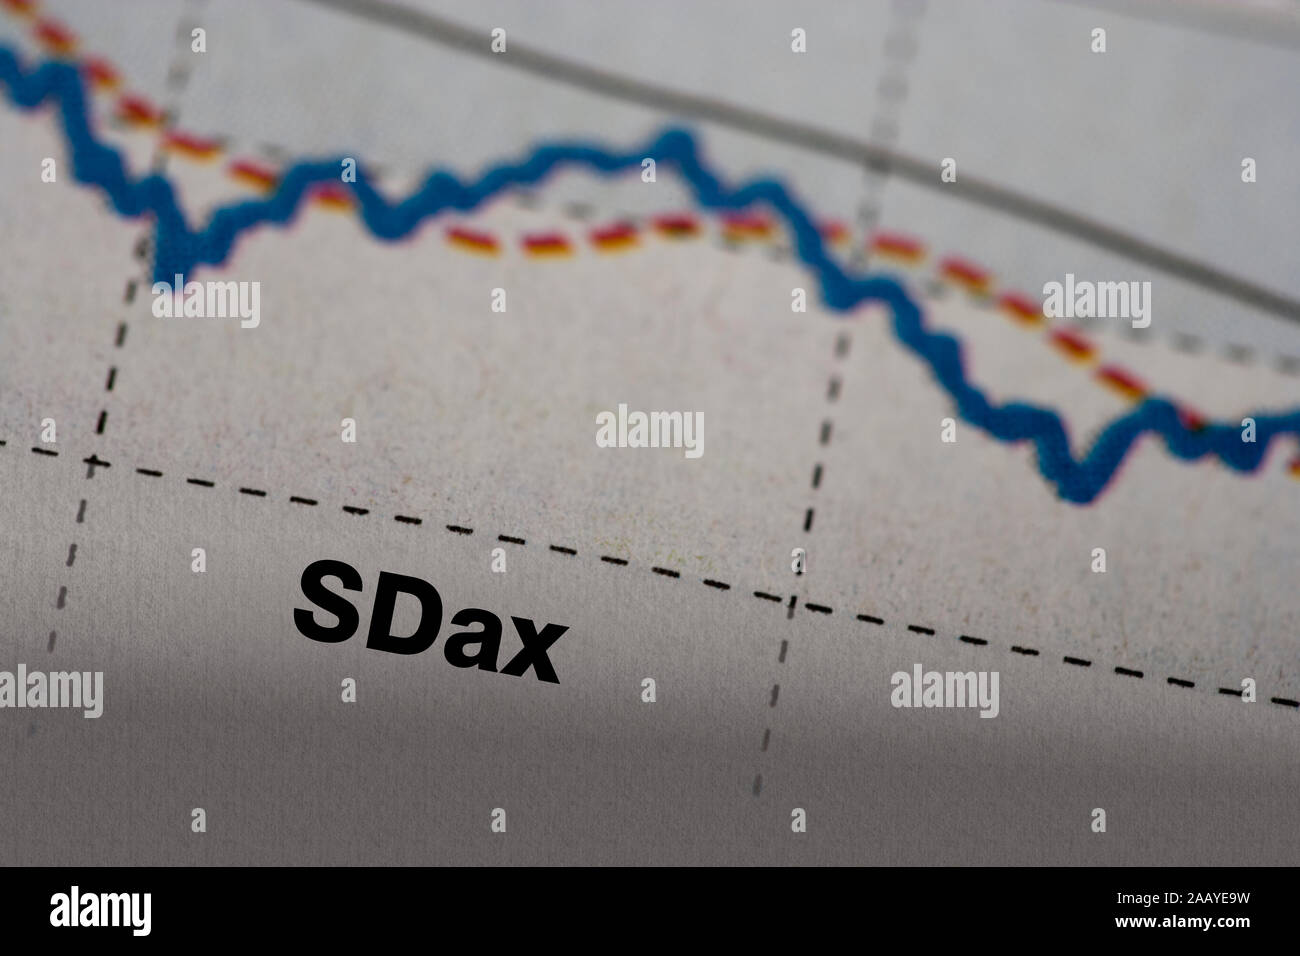 diagram, newspaper; stock market Stock Photo